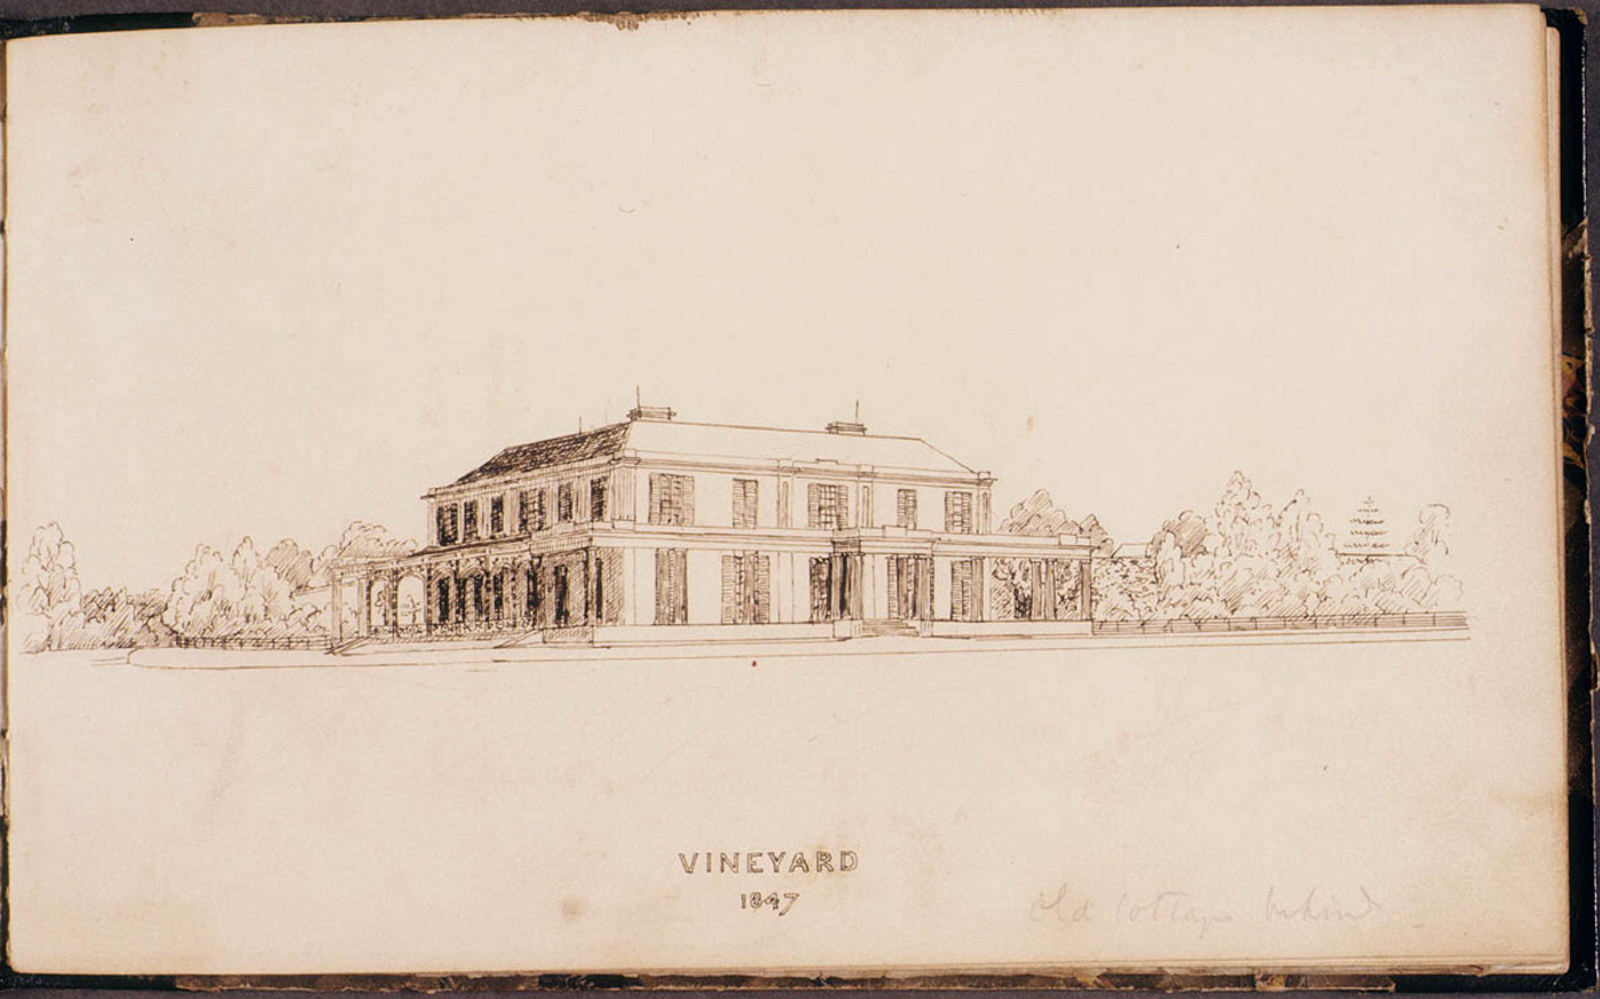 Vineyard 1847